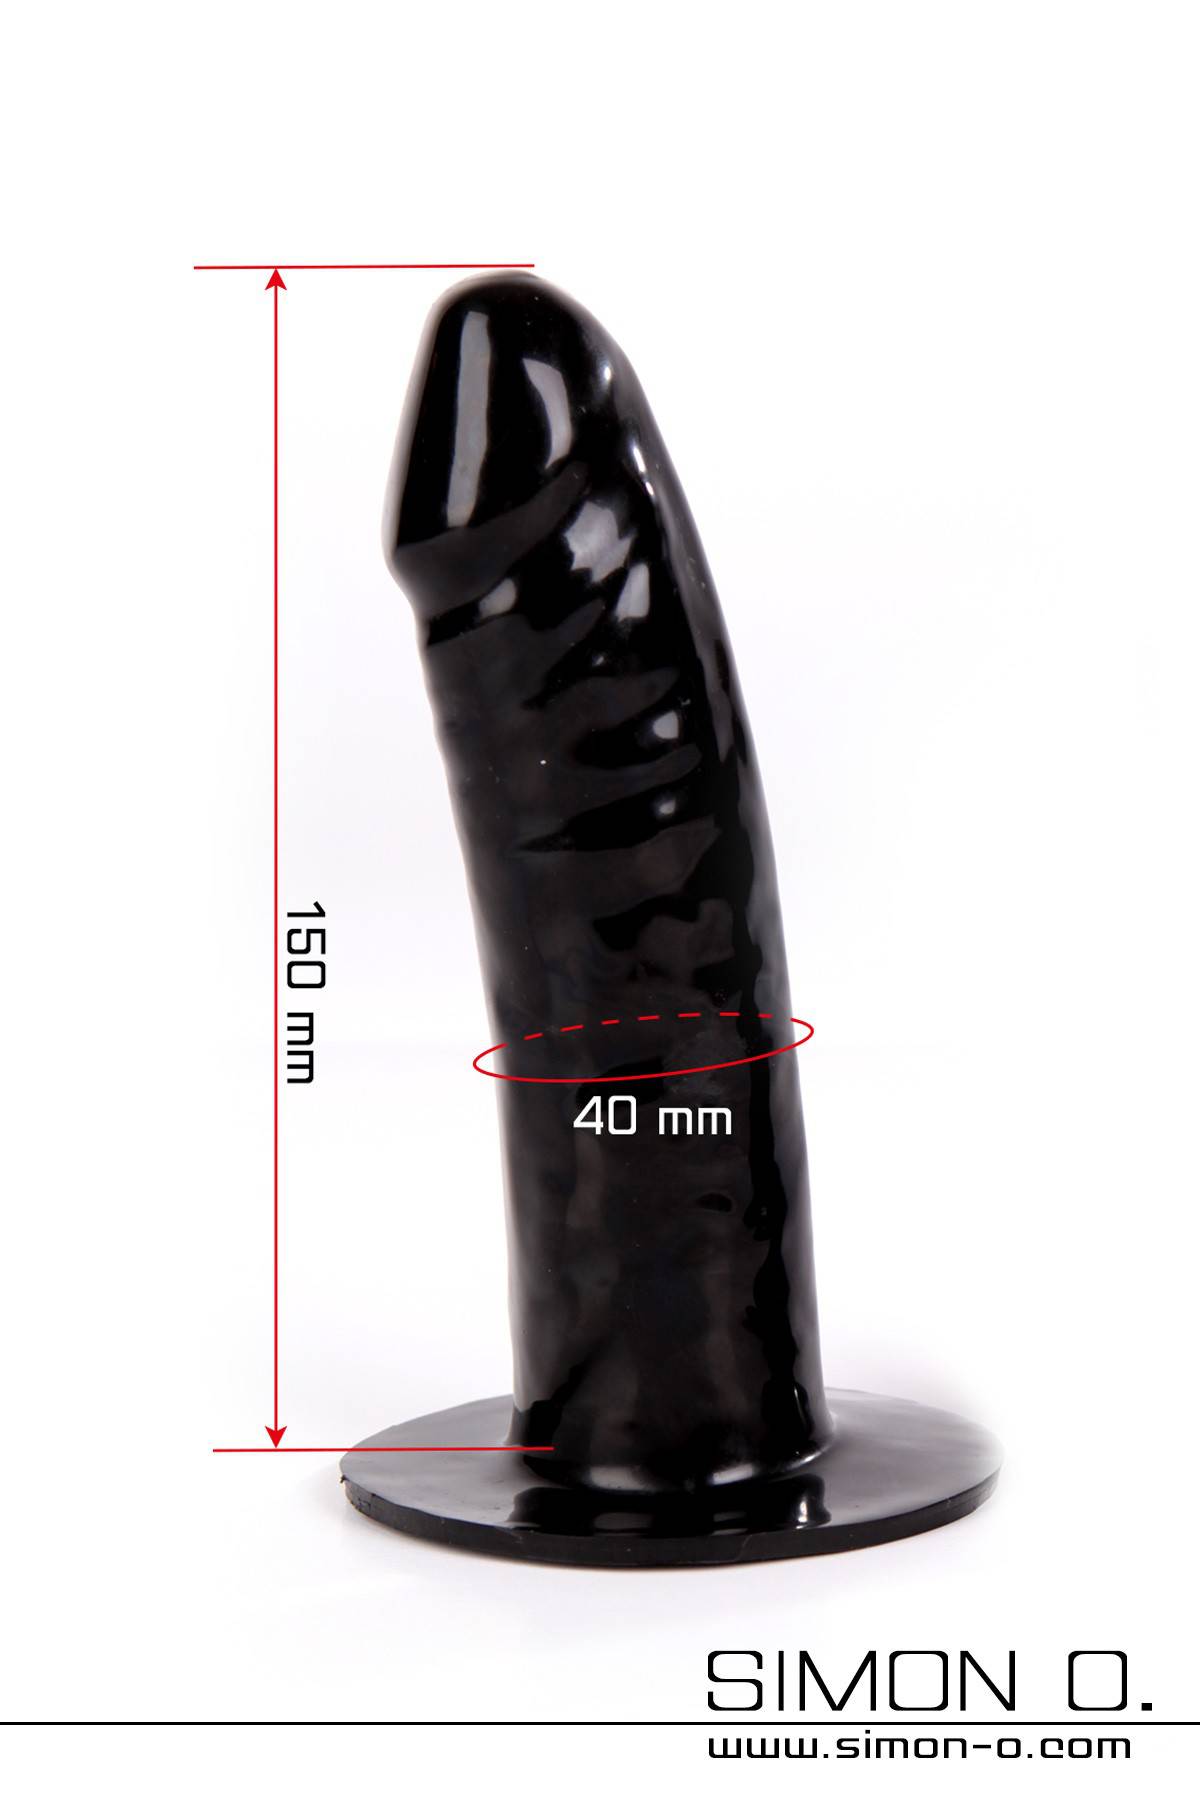 Medium sized latex dildo in black to glue into latex clothes